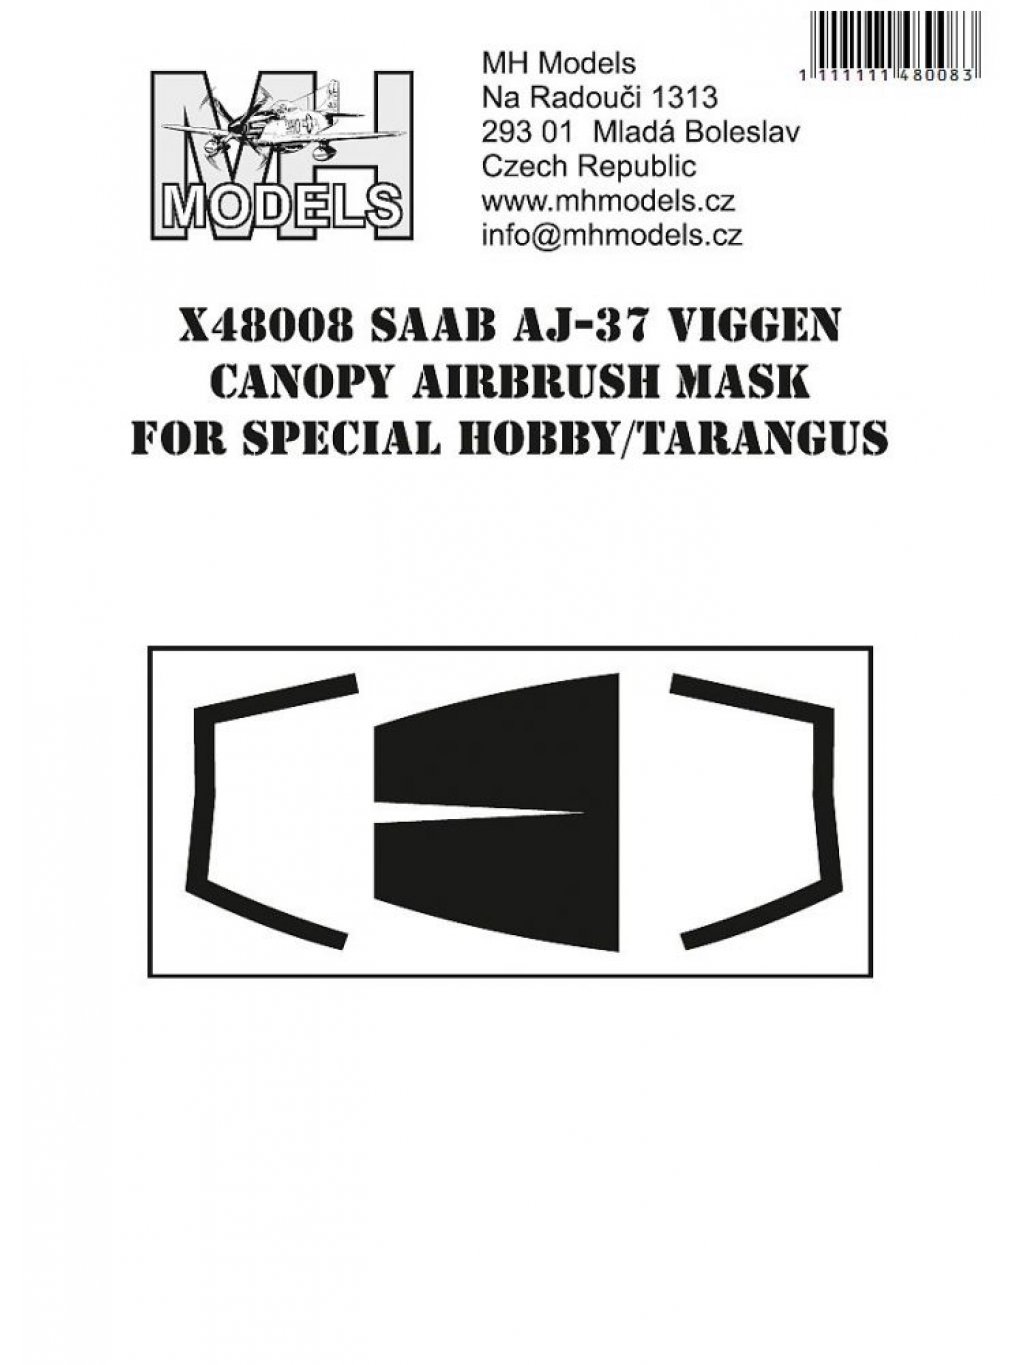 SAAB AJ-37 VIGGEN CANOPY AIRBRUSH MASK